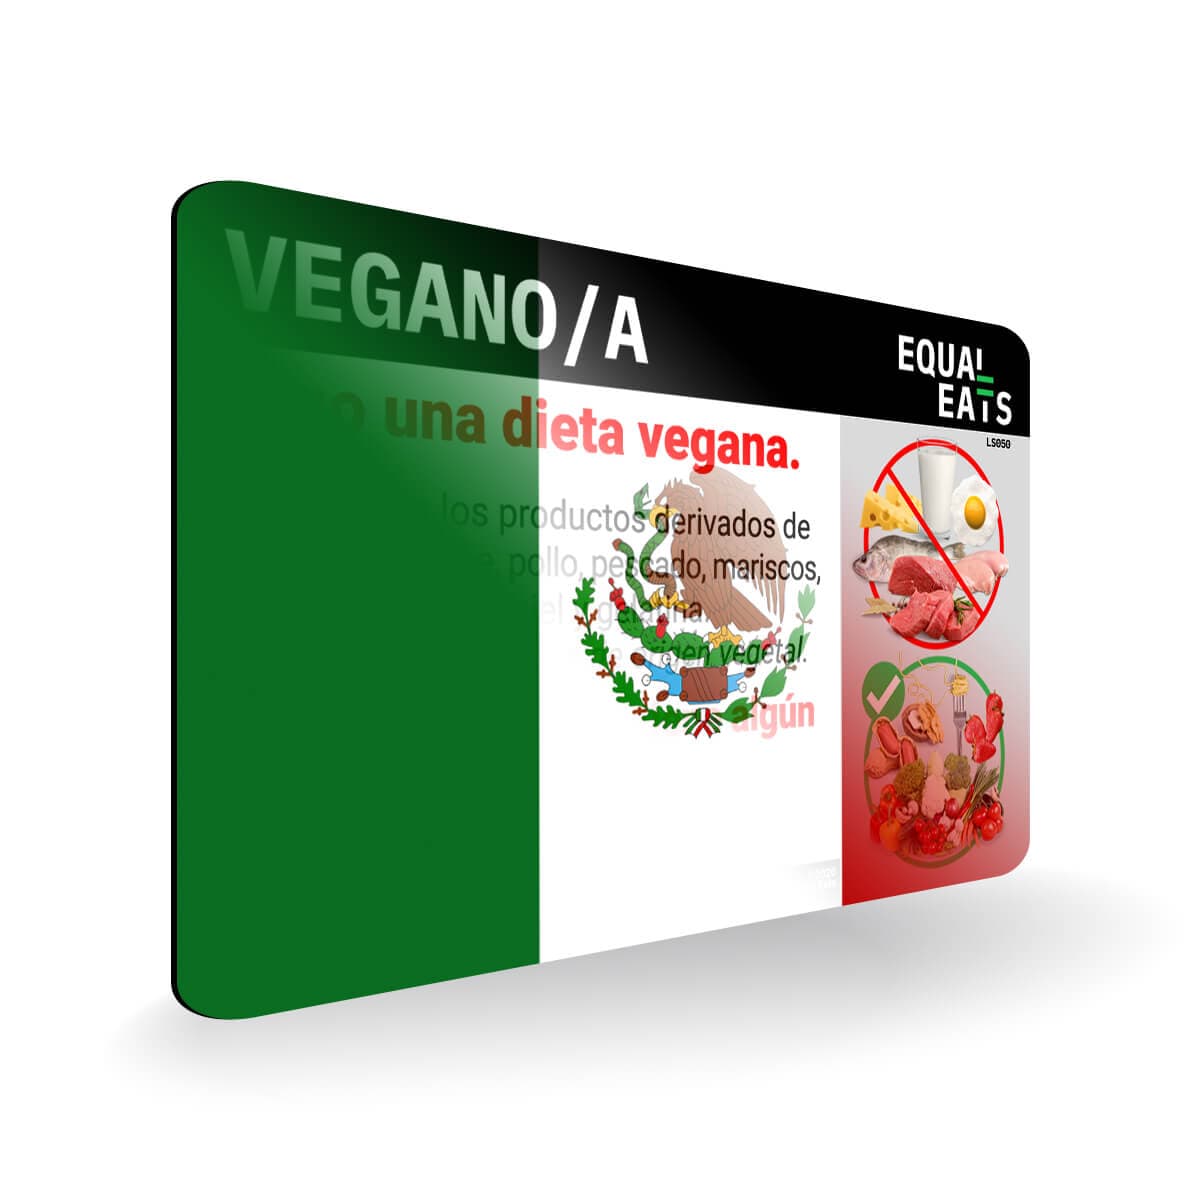 Vegan Diet in Spanish. Vegan Card for Latin America